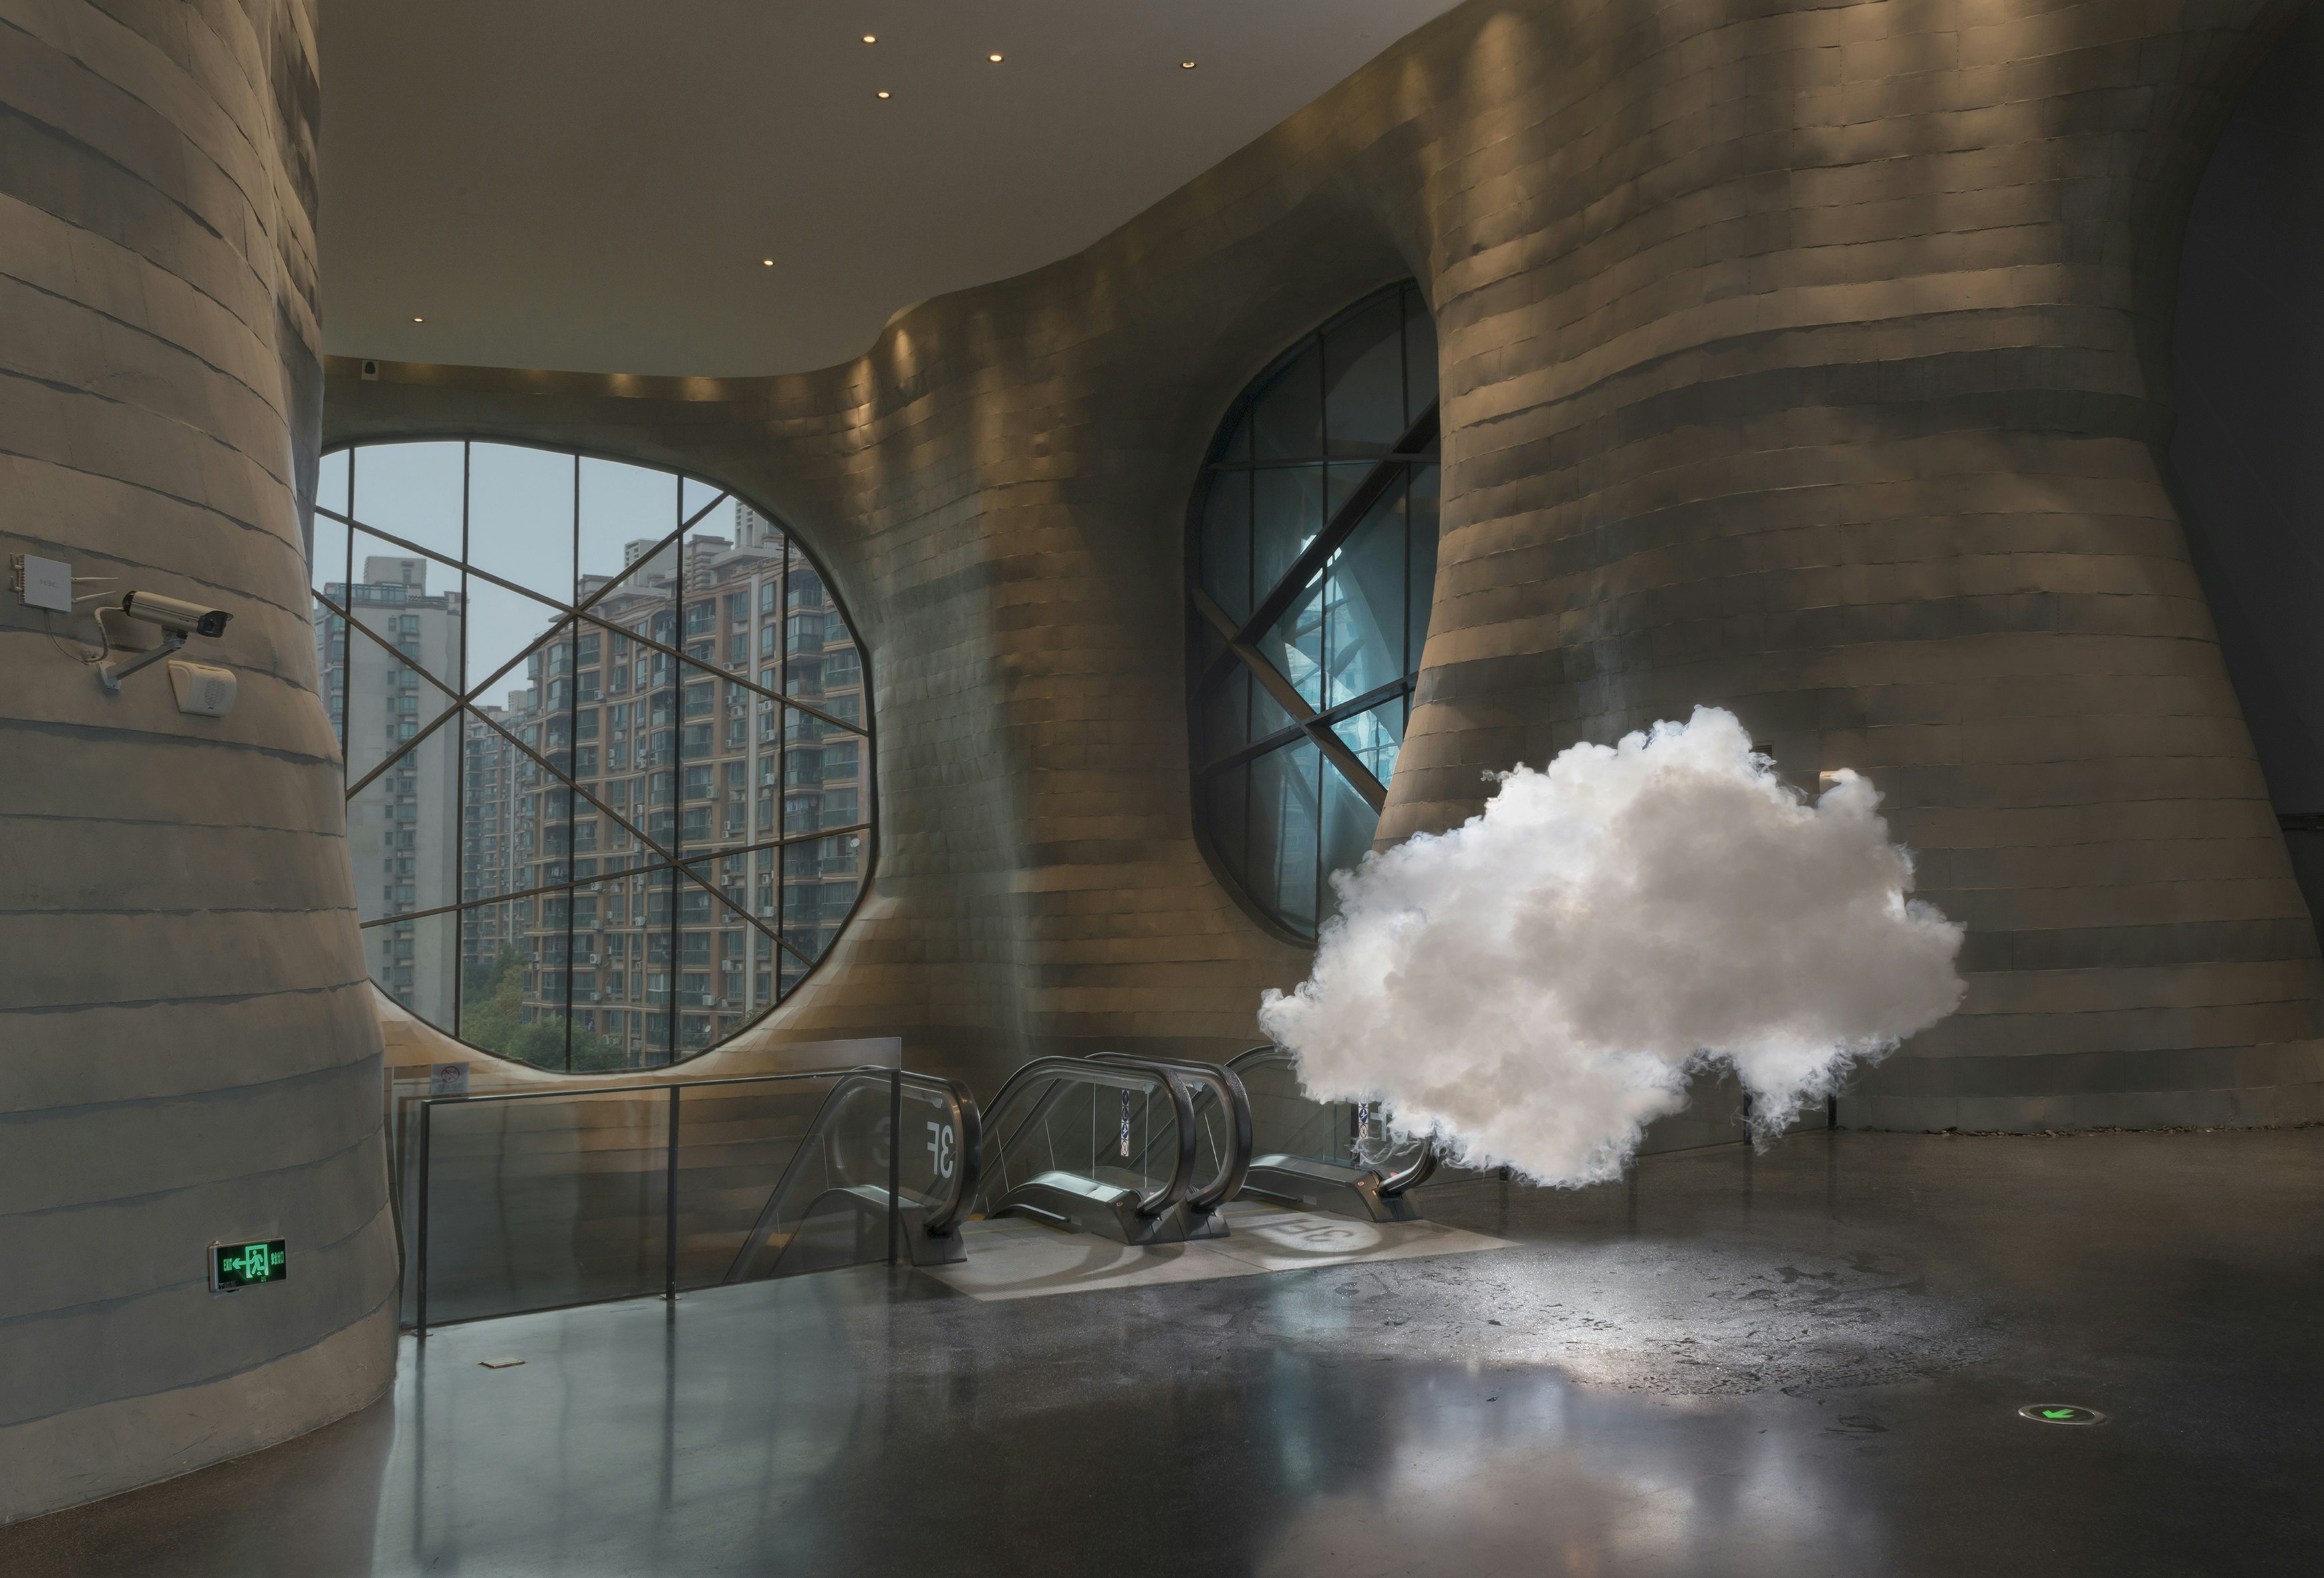 A realistic cloud installation by Berndnaut Smilde